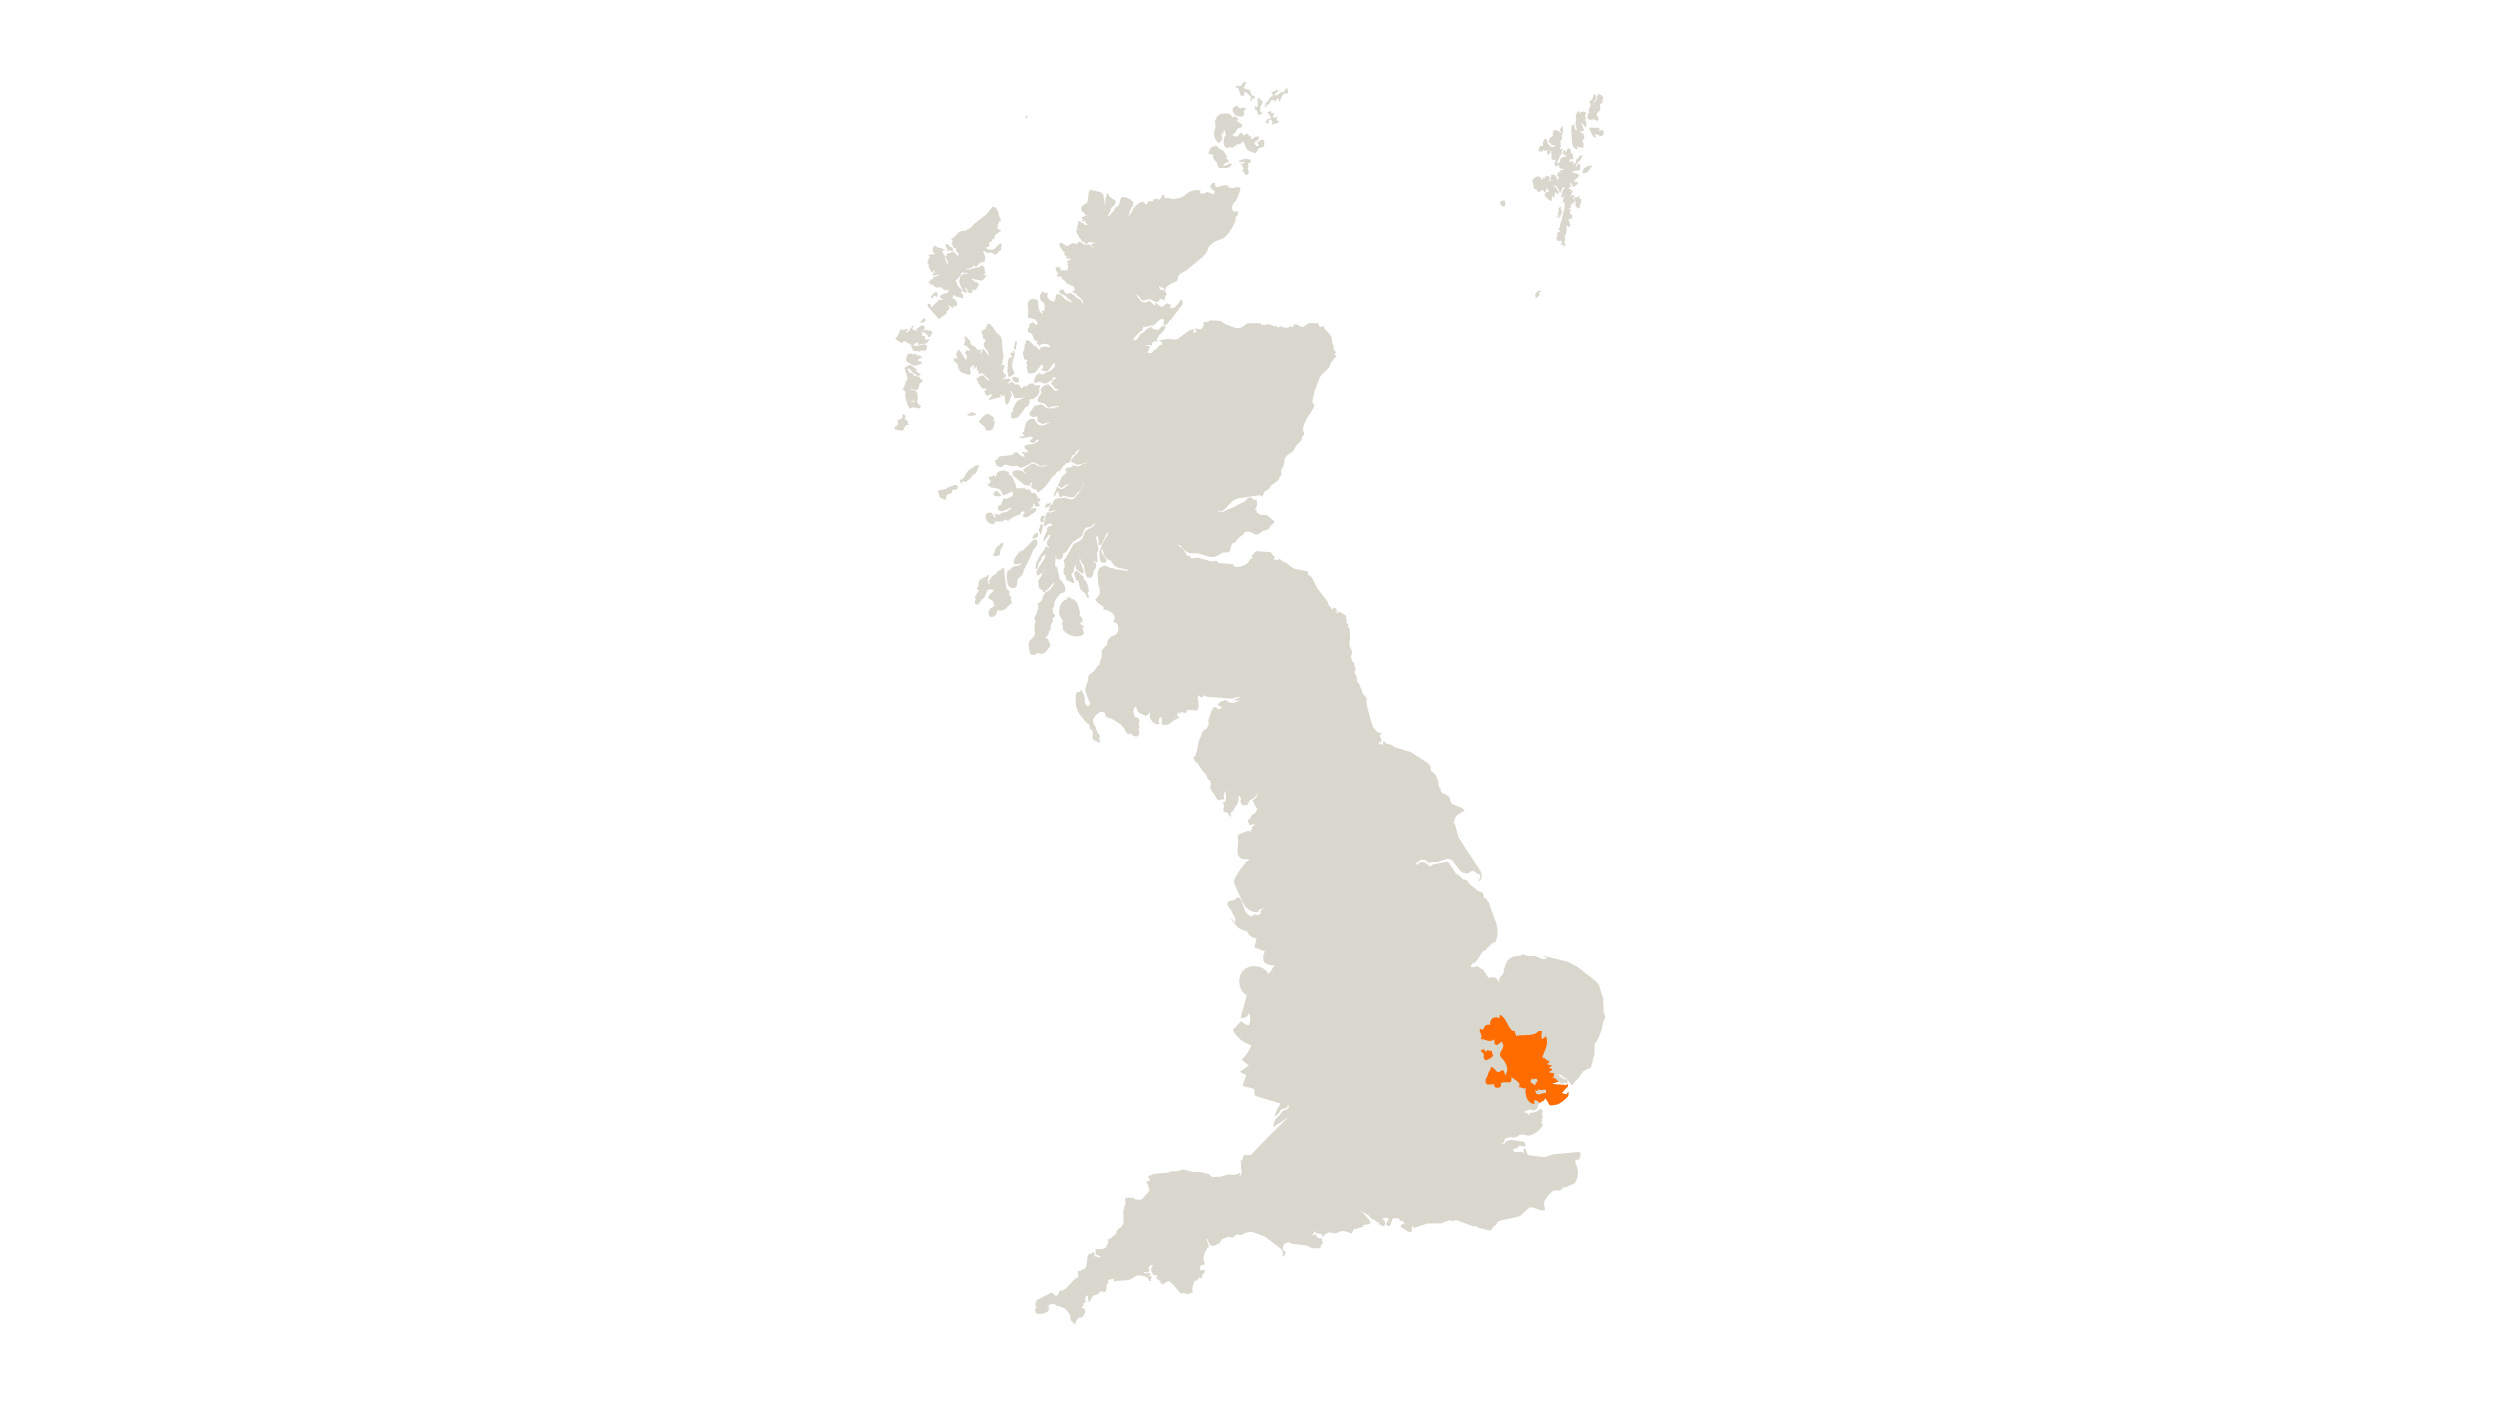 KWS-GB-Consultant-Map-Sugarbeet-John-Goodchild.jpg